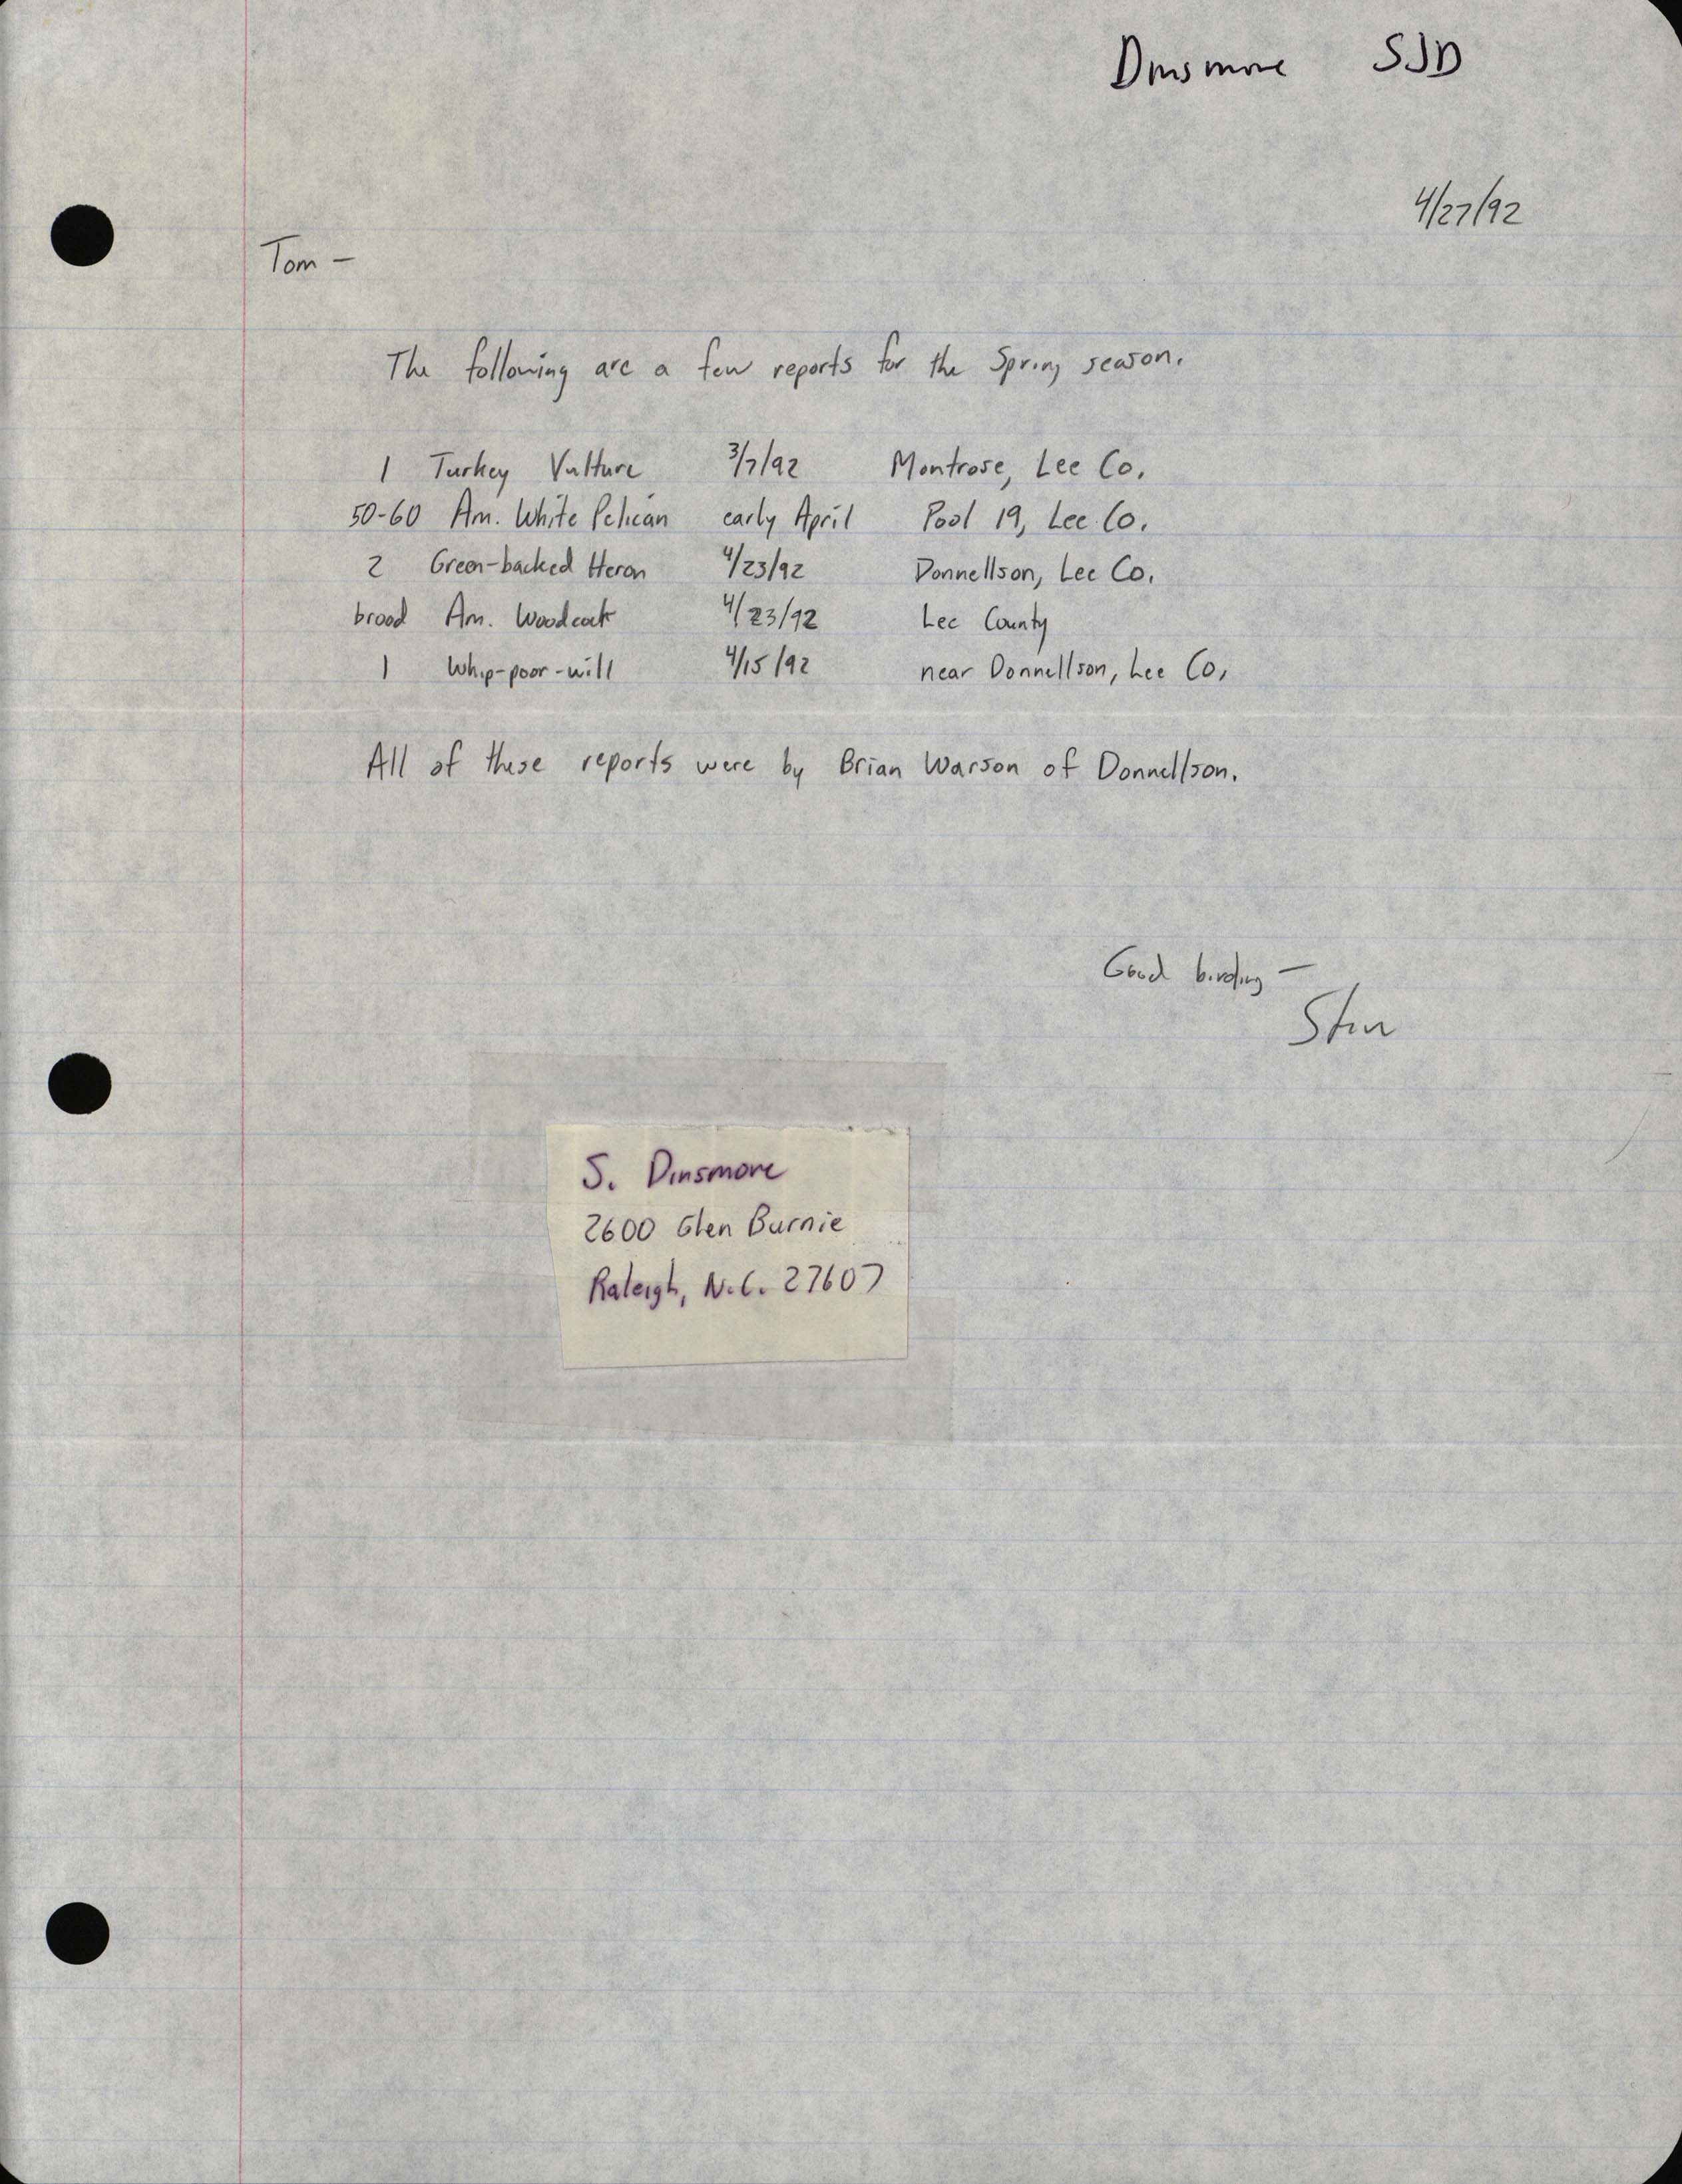 Stephen J. Dinsmore letter to Thomas H. Kent regarding bird sightings, April 27, 1992